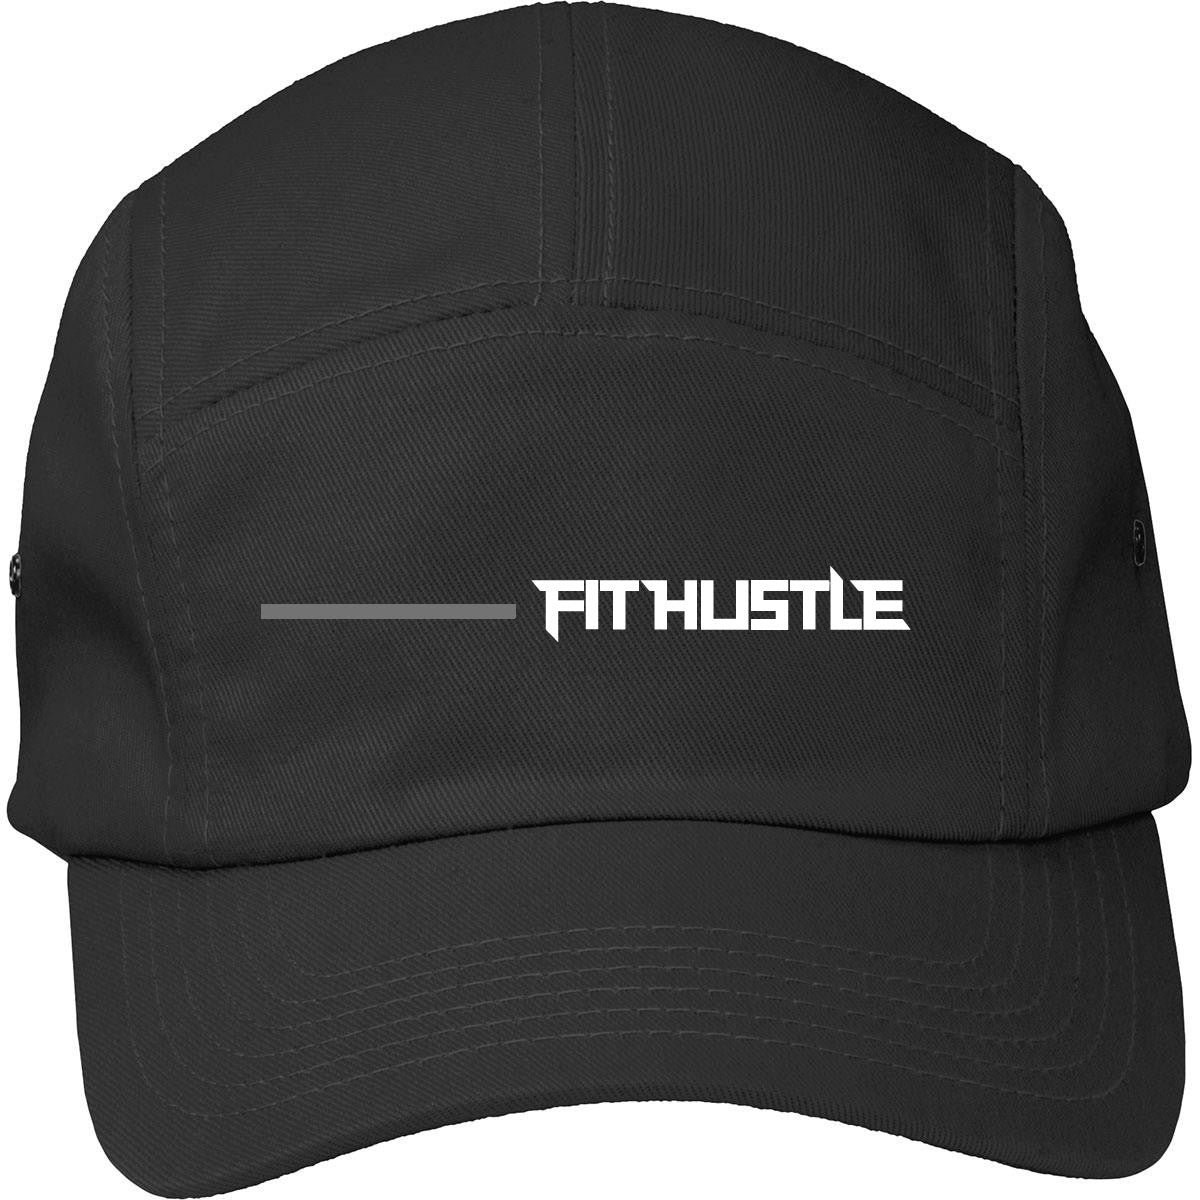 'Flat Line' - Black/Grey 5-Panel Hat Fabric: 100% Cotton twill